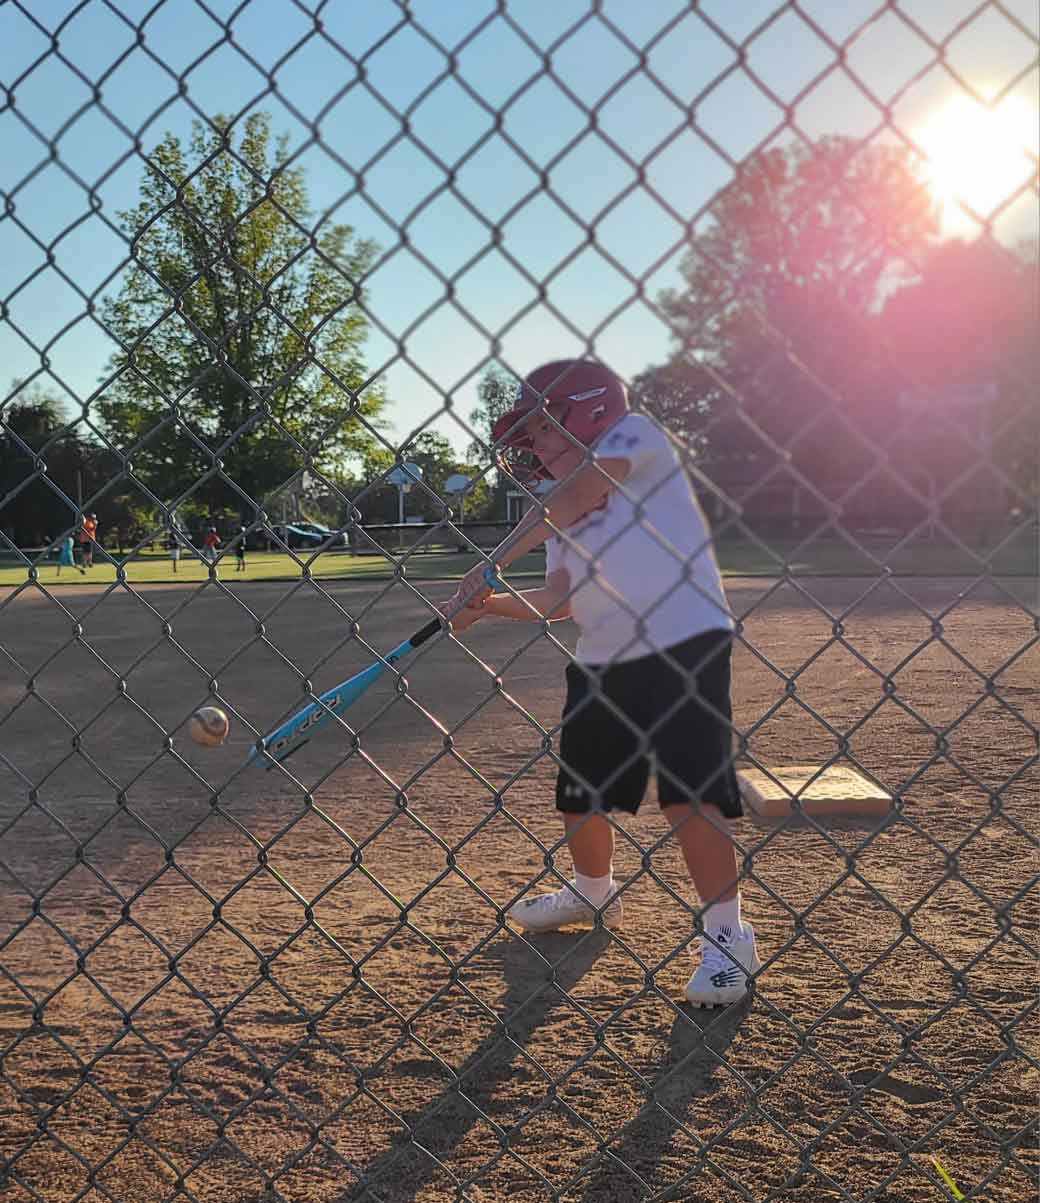 Boy hitting a baseball towards a fence.